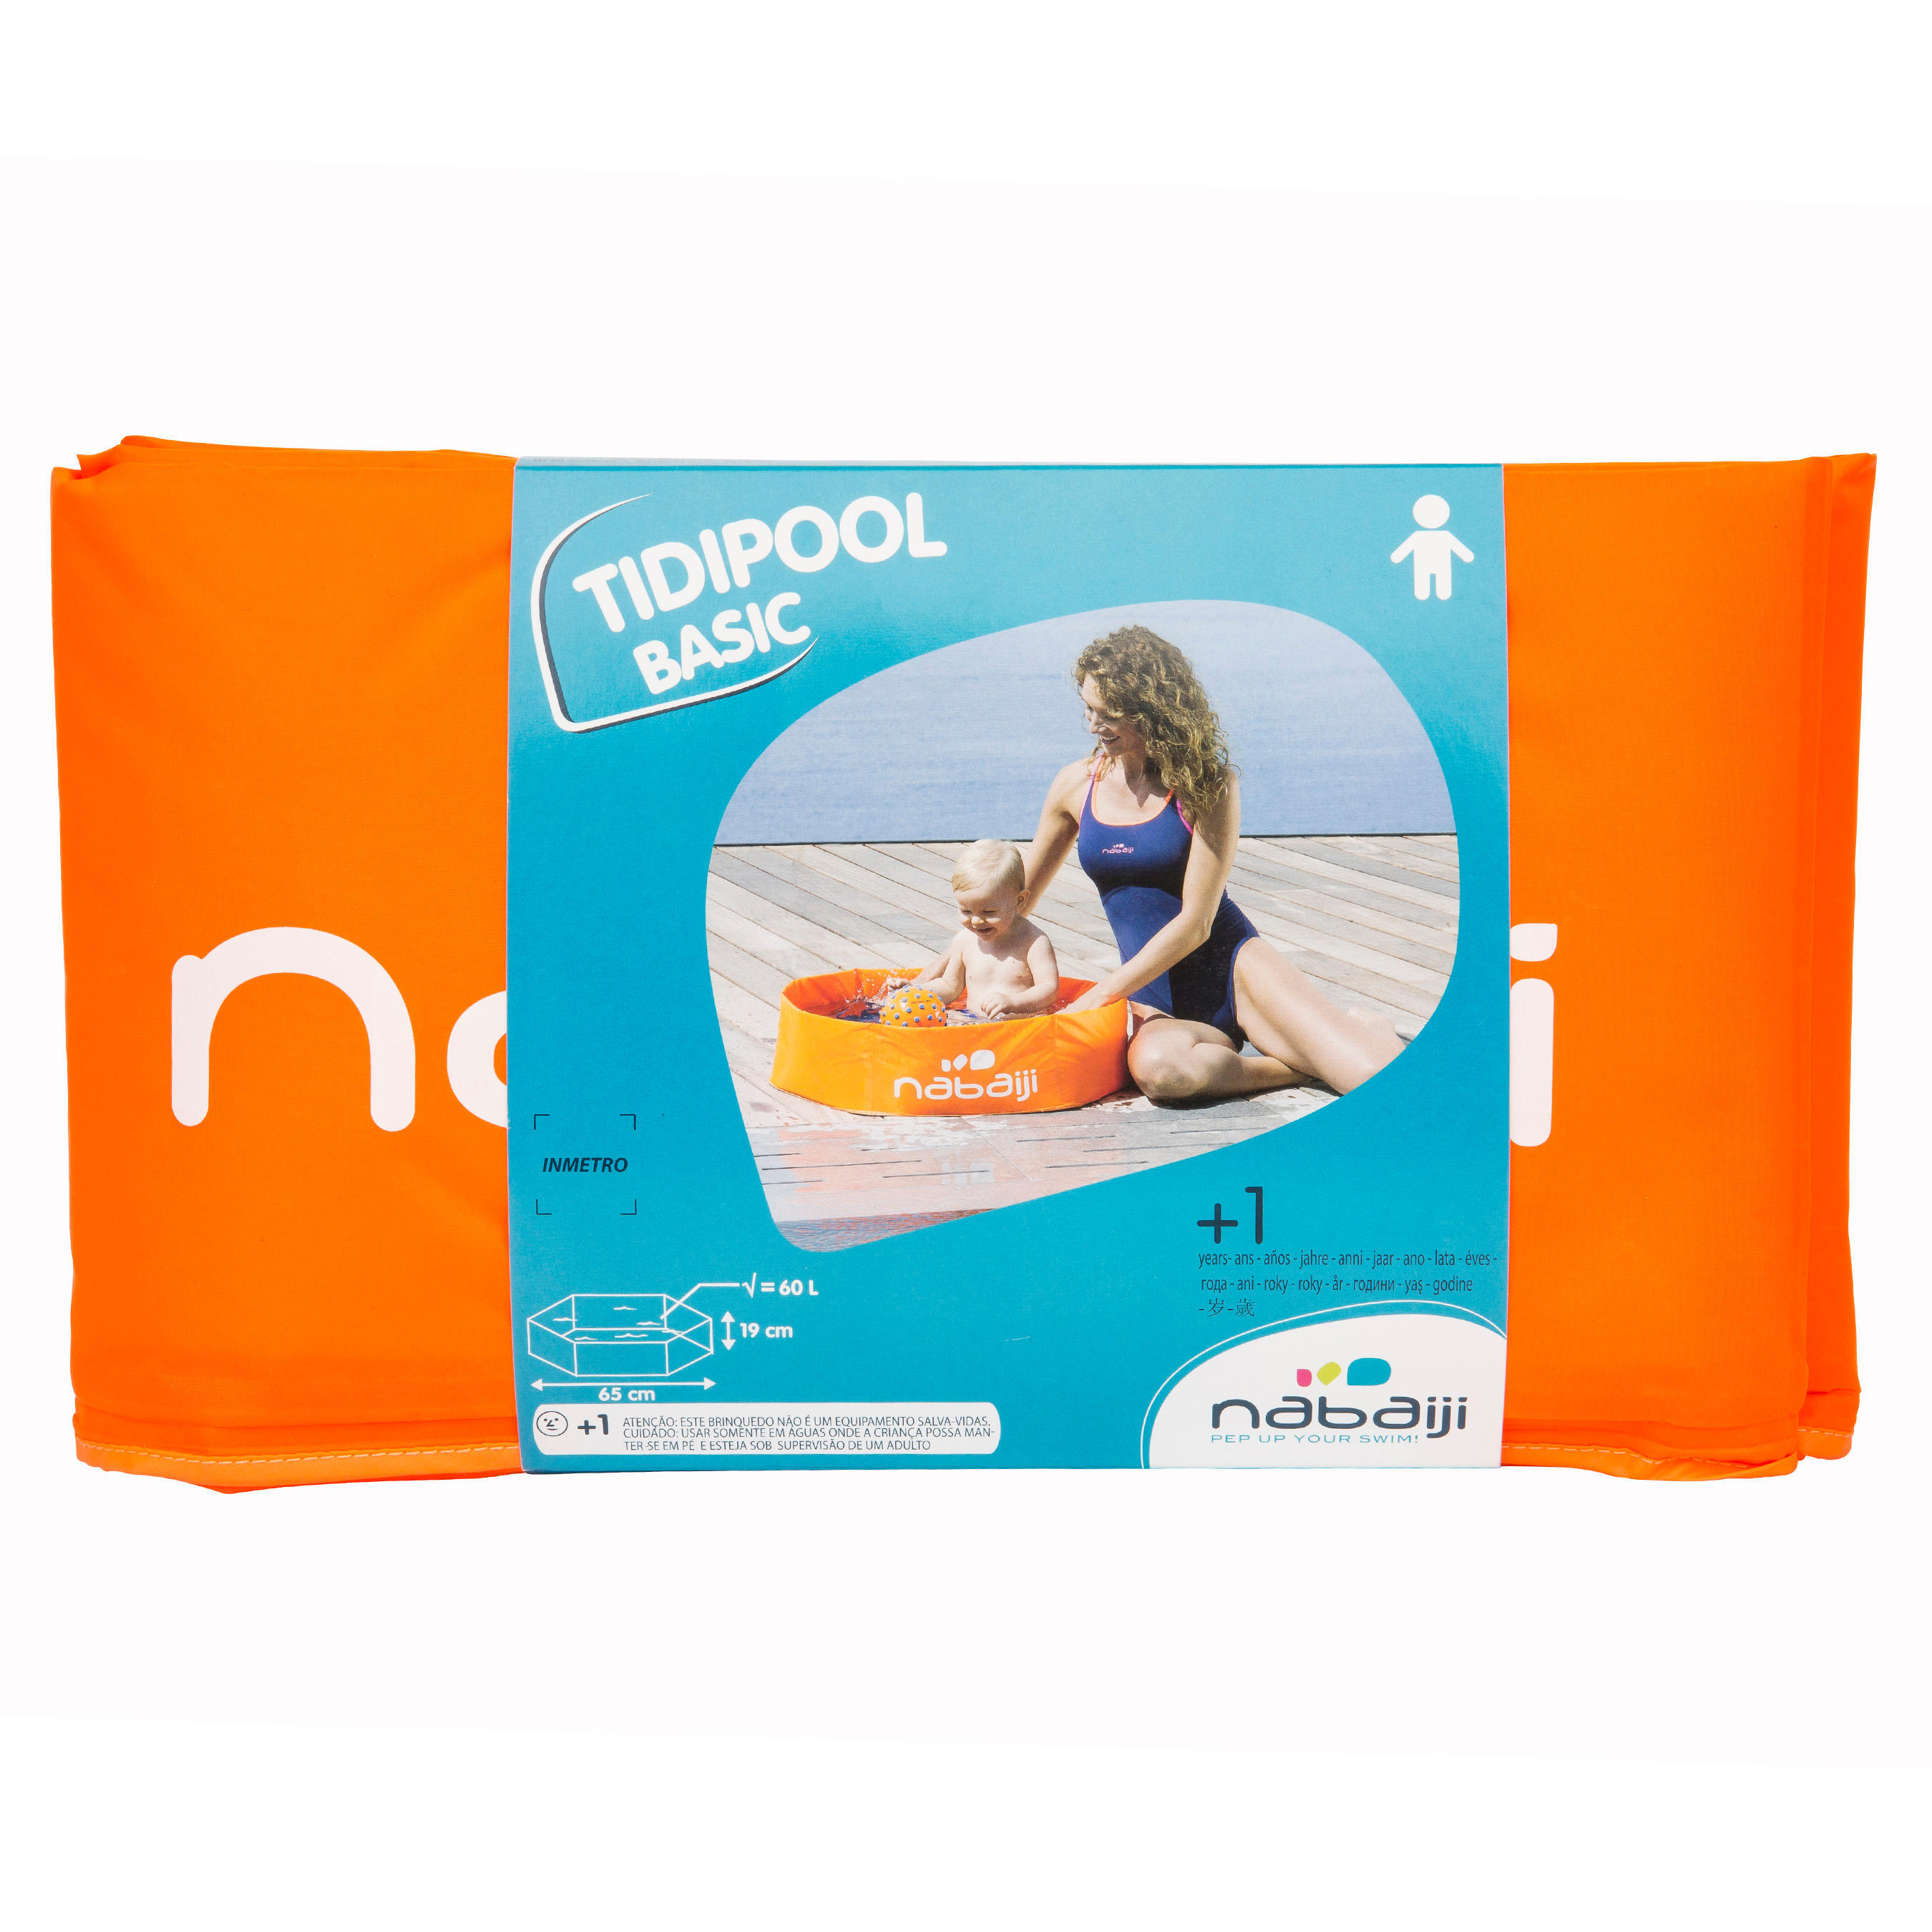 TIDIPOOL BASIC 65 m diameter foam paddling pool for infants - Orange 6/6